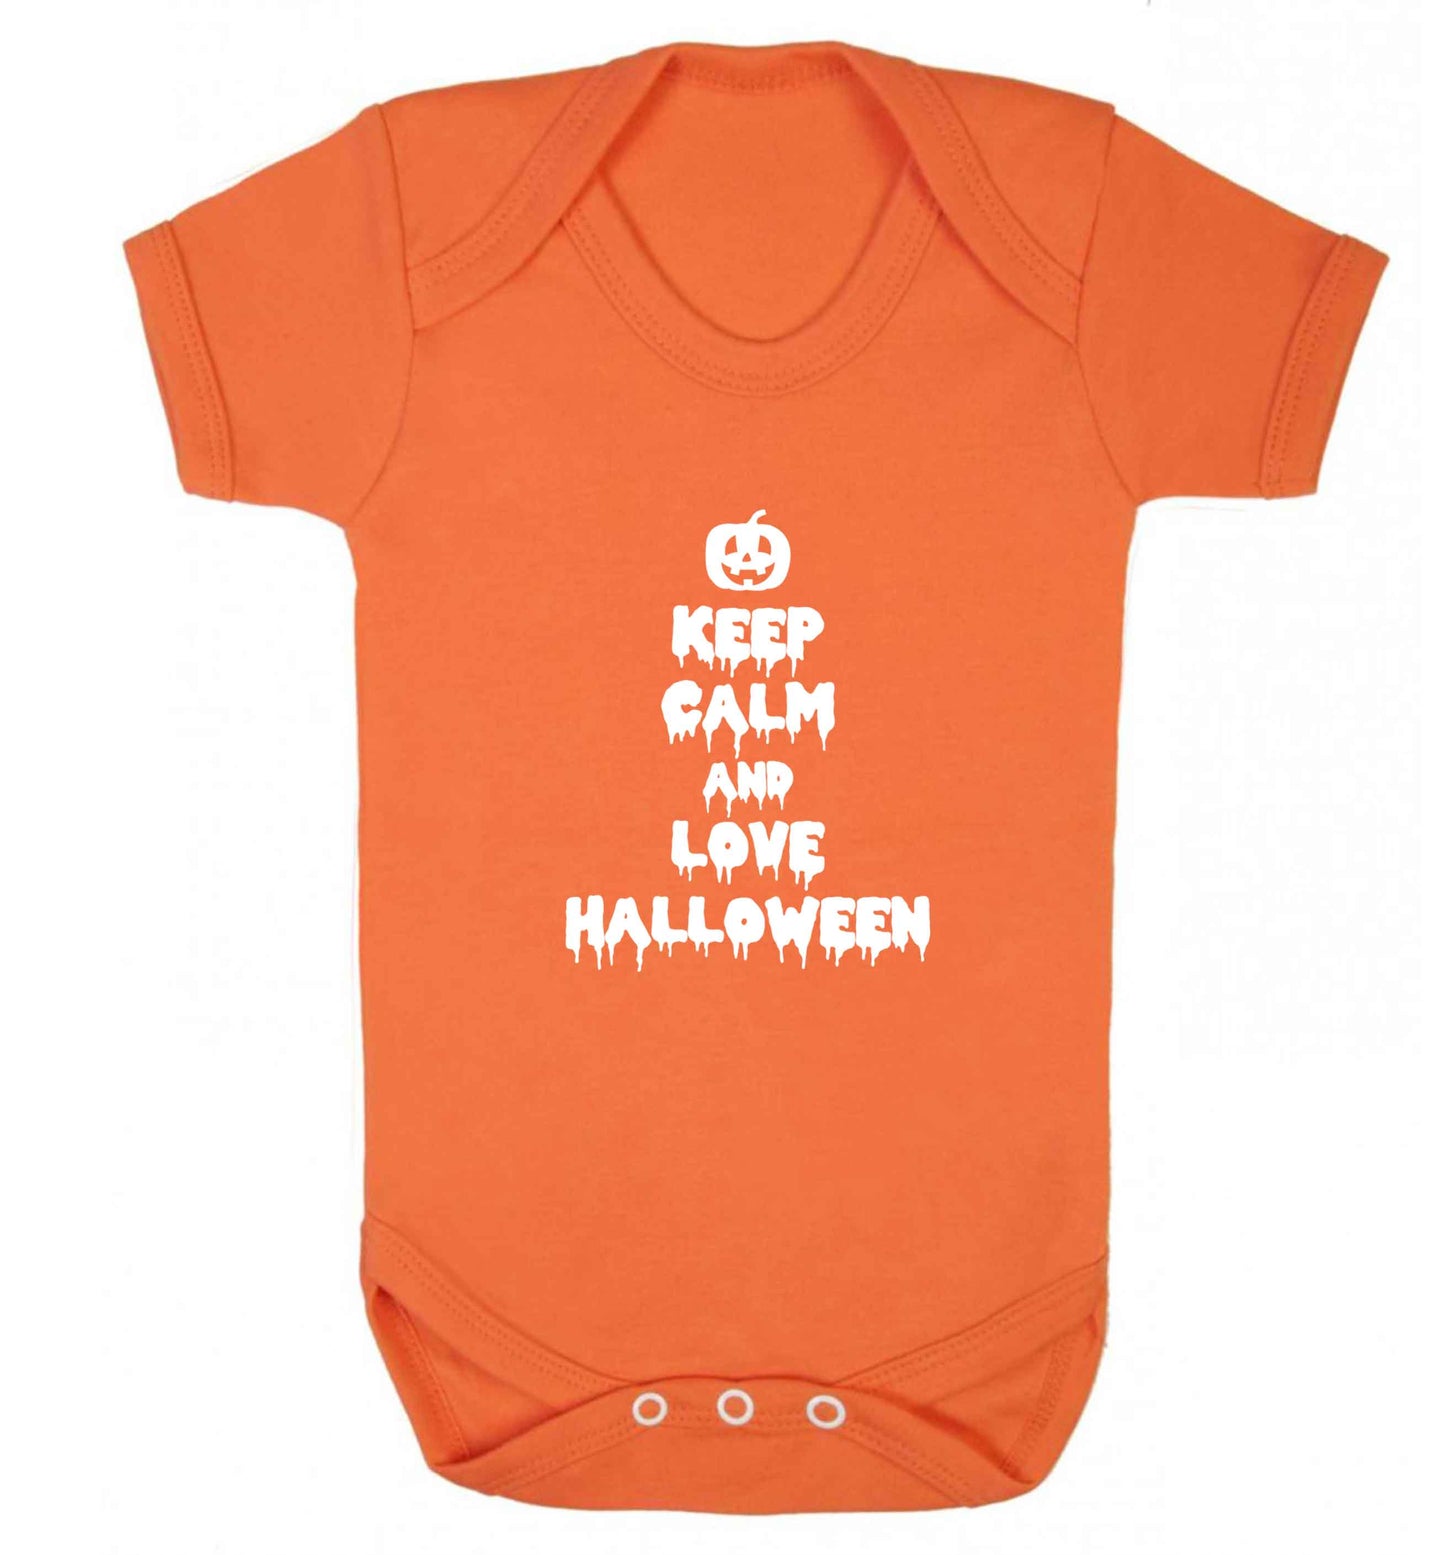 Keep calm and love halloween baby vest orange 18-24 months